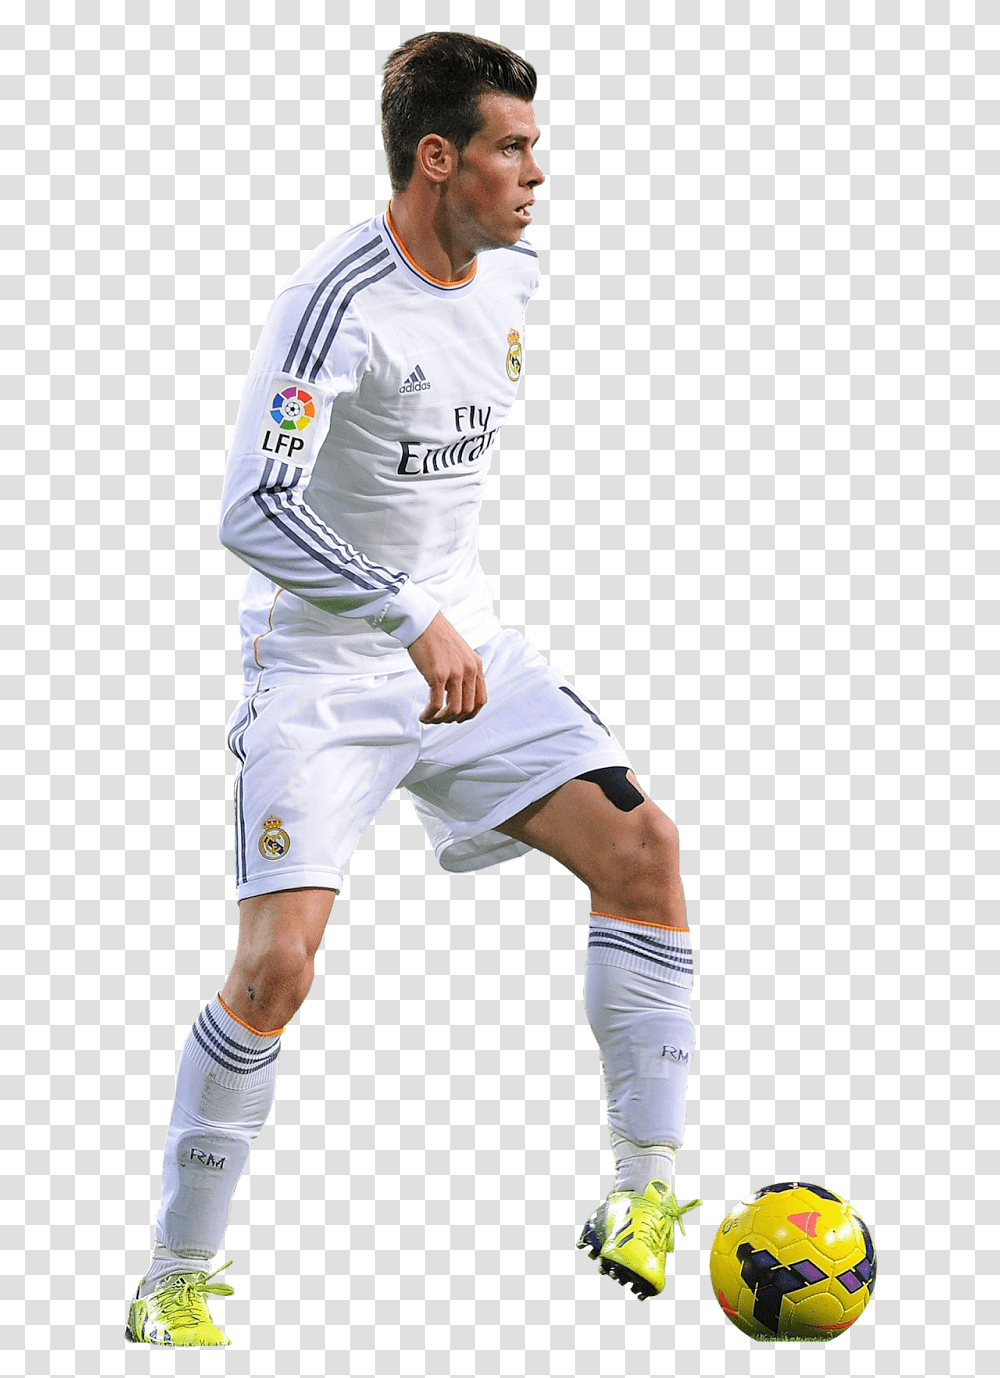 A Player Play Football Image Futbolist Na Prozrachnom Fone, Apparel, Shorts, Soccer Ball Transparent Png